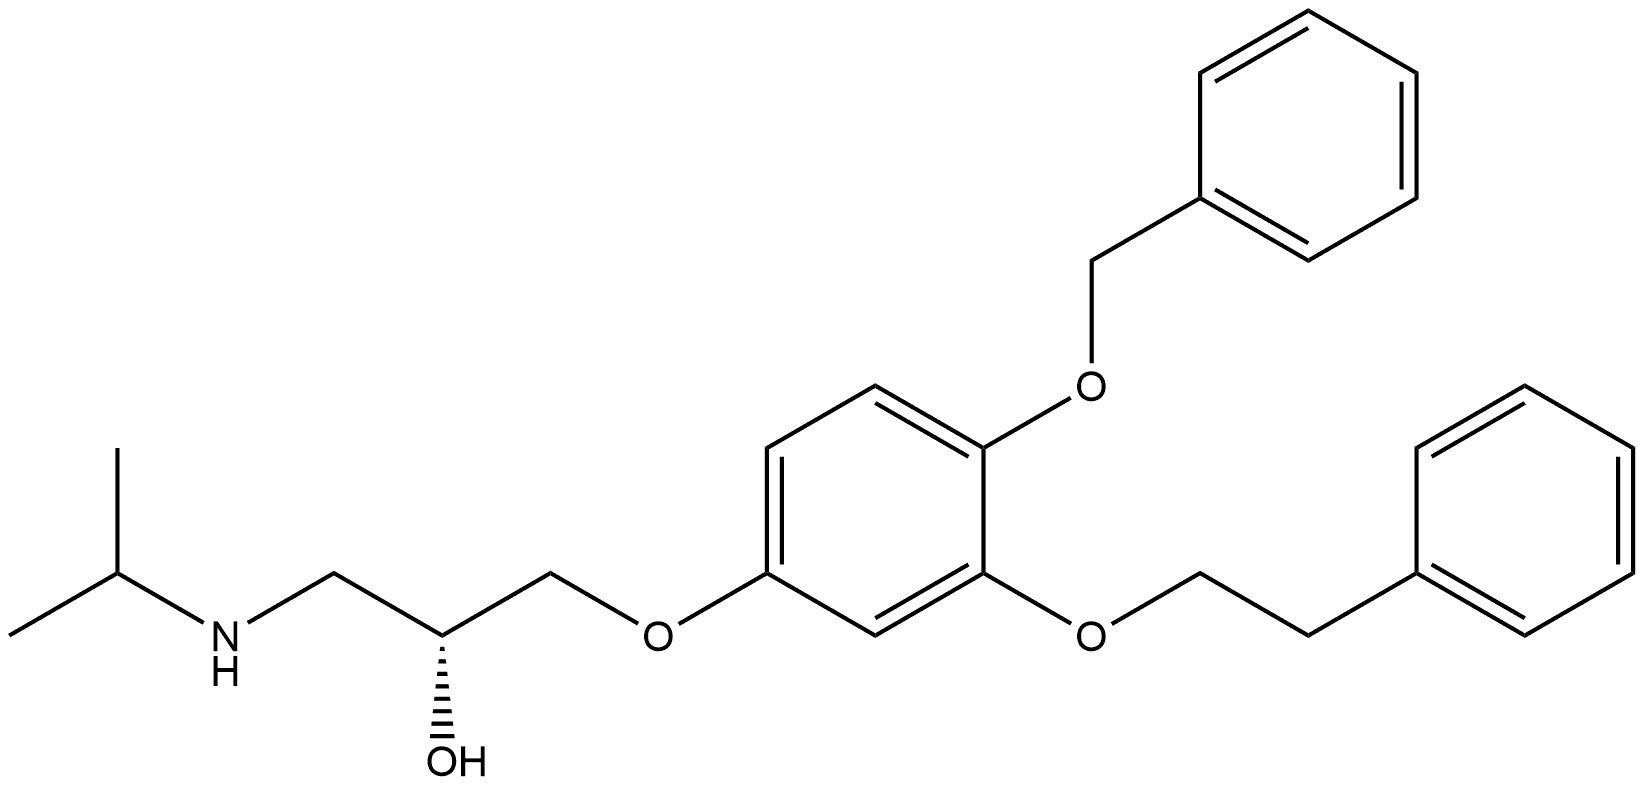 p62-ZZ ligand YOK-1304 Structure